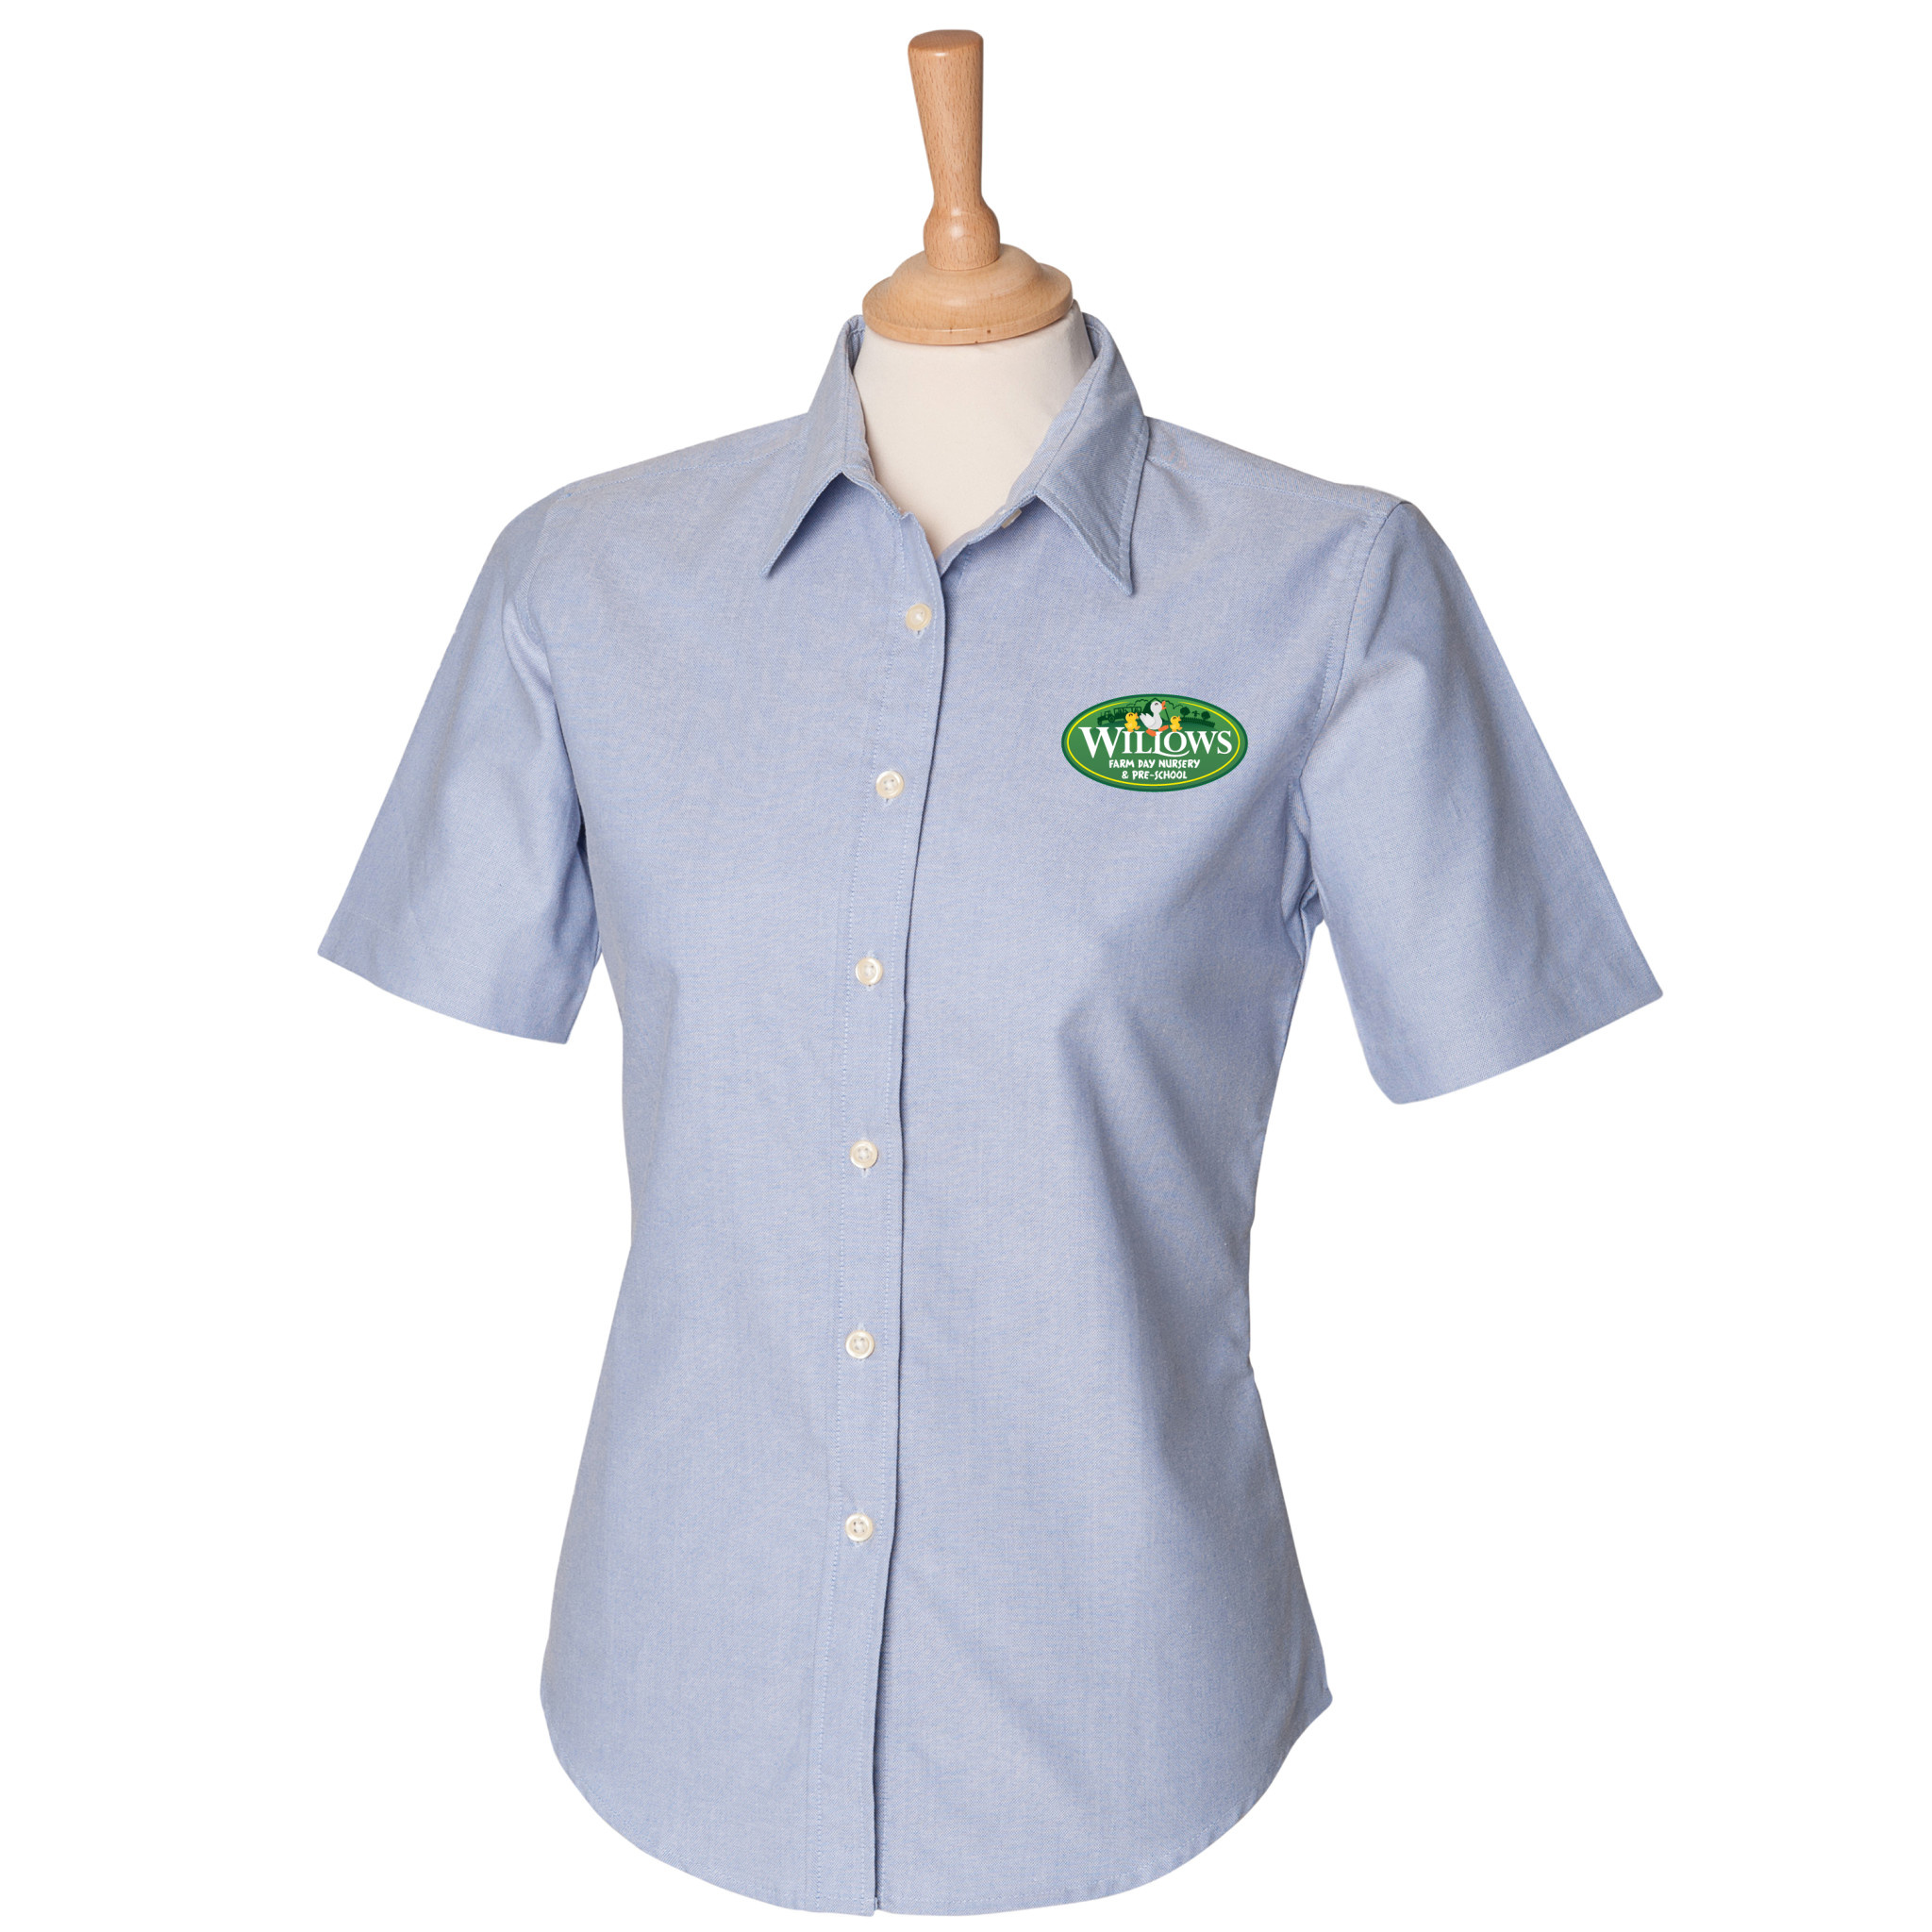 Willows Nursery Ladies S/S Oxford Shirt